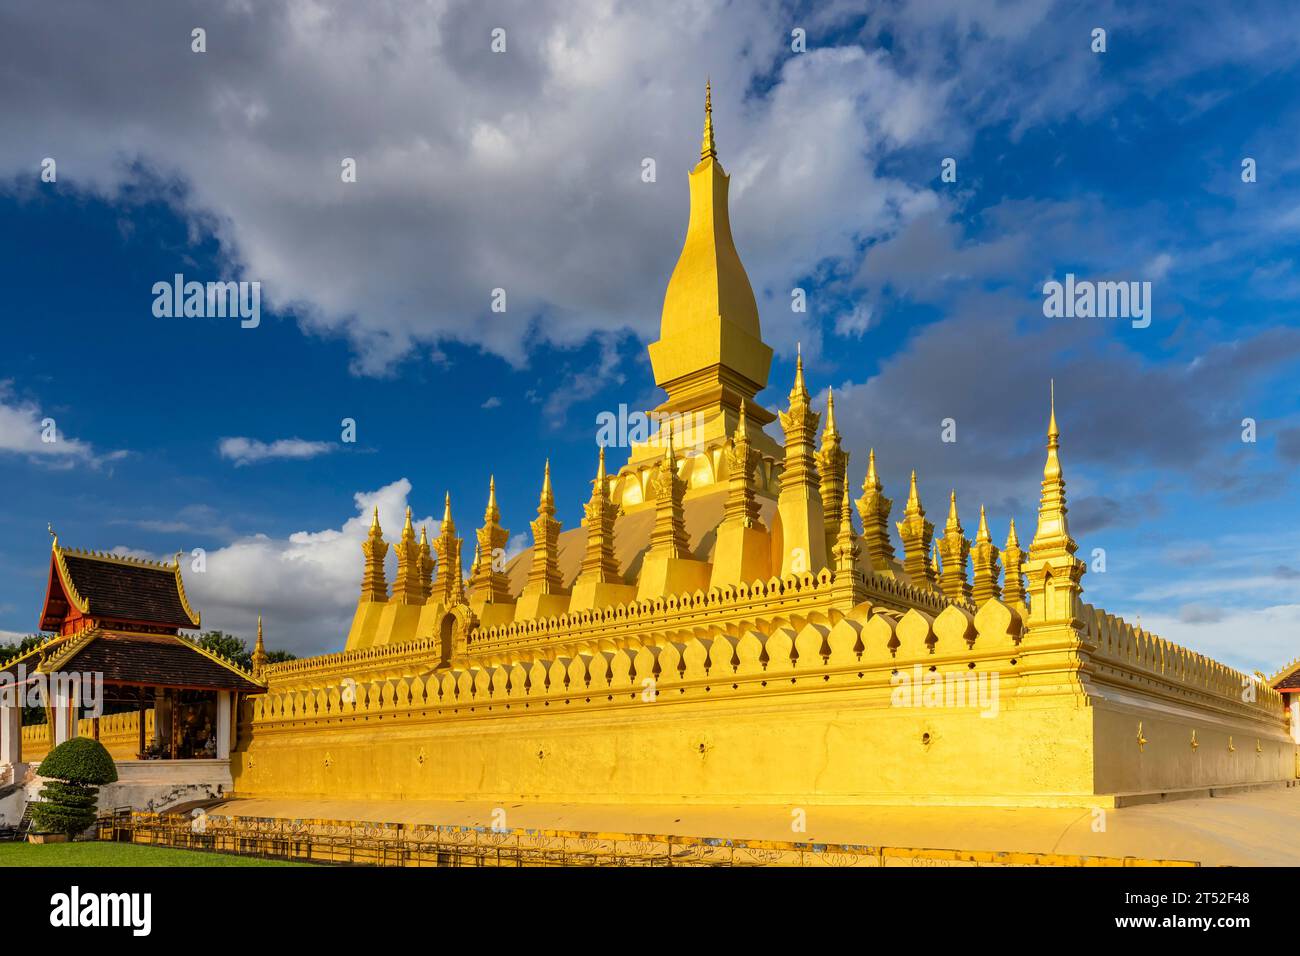 PHA That Luang, That Luang, estupa y templo budista simbólico nacional, Vientián, Laos, Sudeste Asiático, Asia Foto de stock